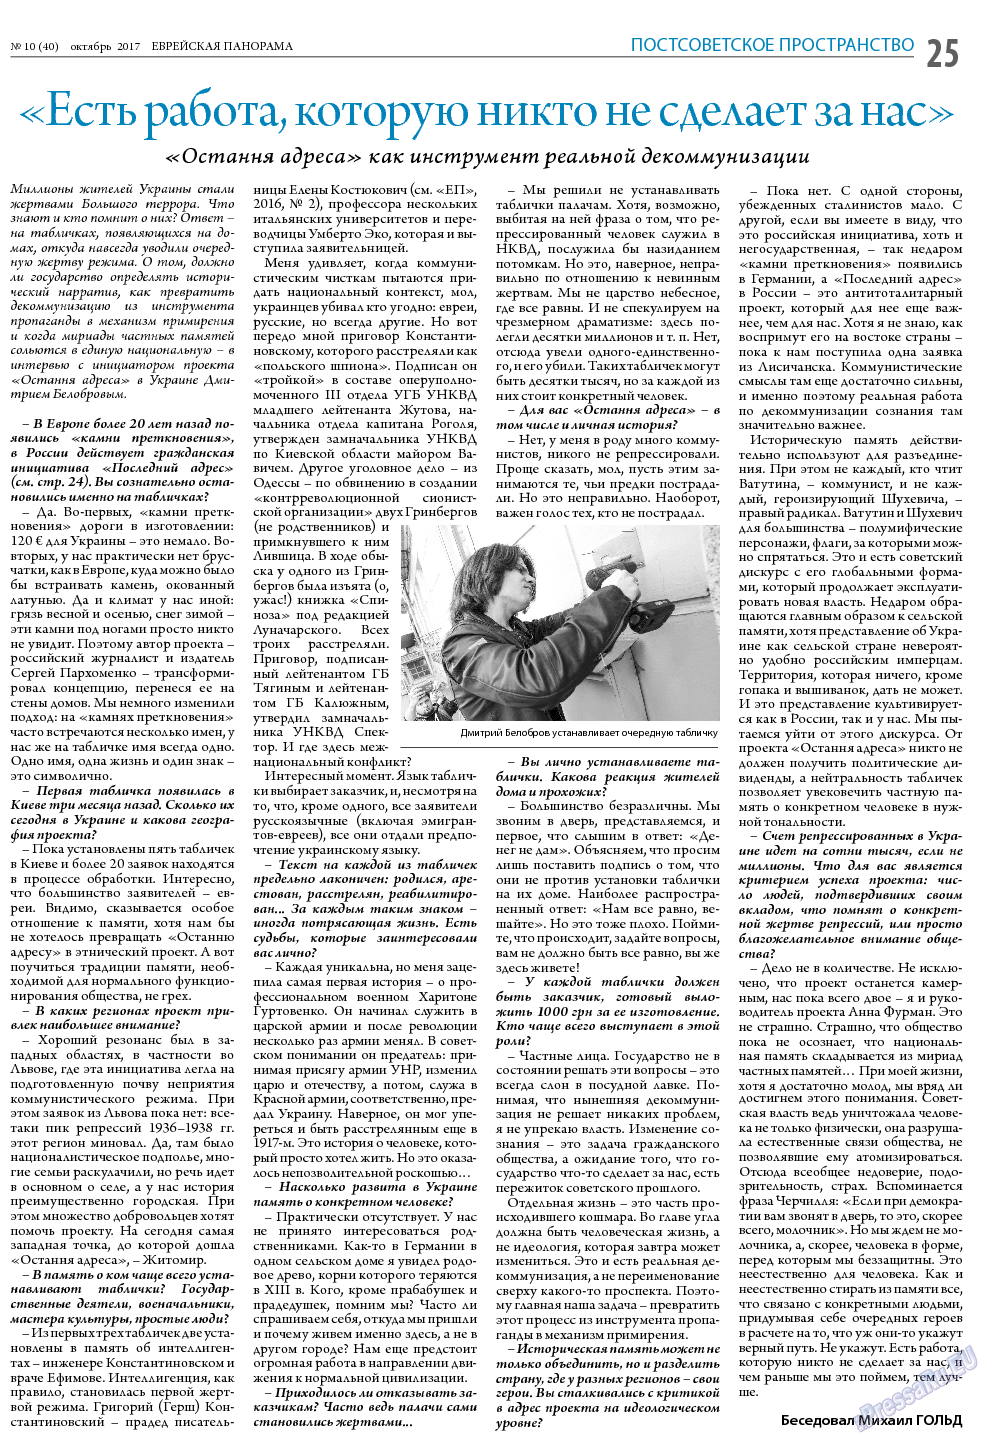 Еврейская панорама, газета. 2017 №10 стр.25